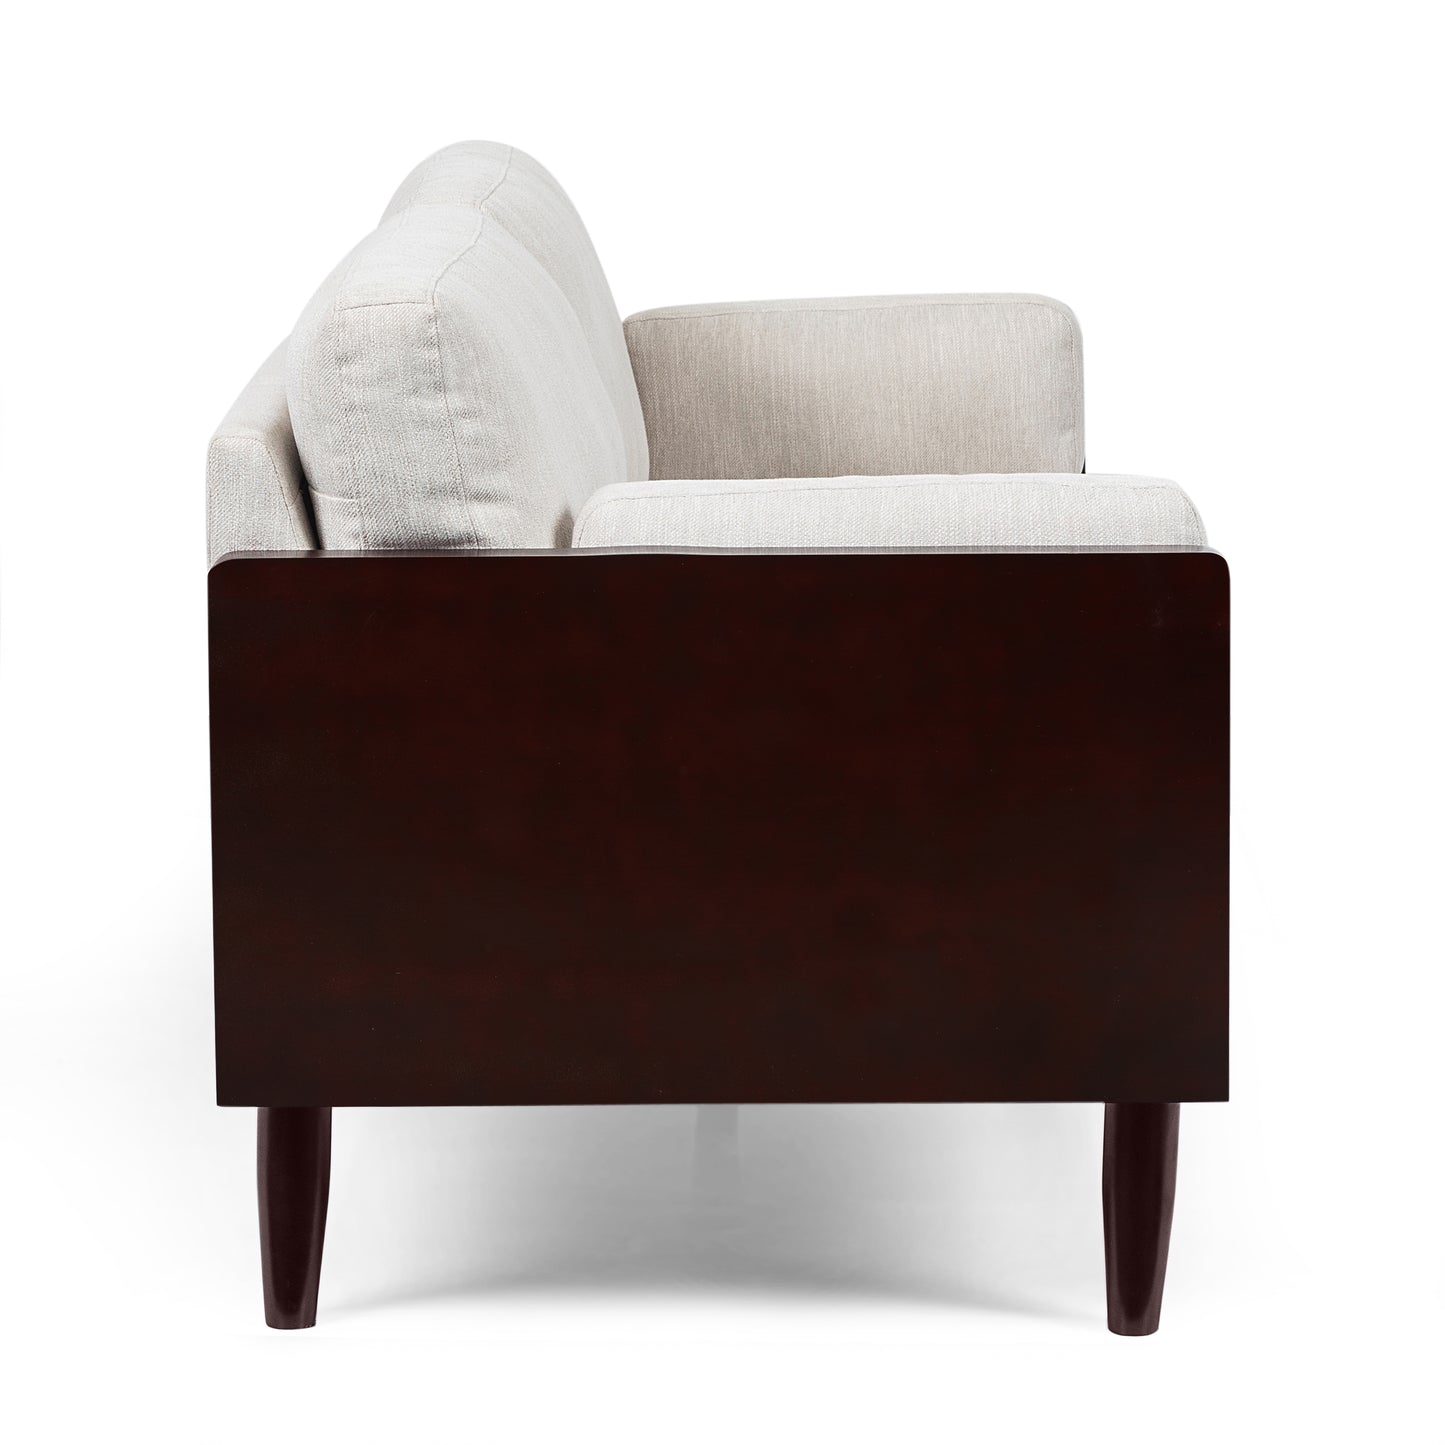 Bagan Mid-Century Modern Upholstered 3 Seater Sofa